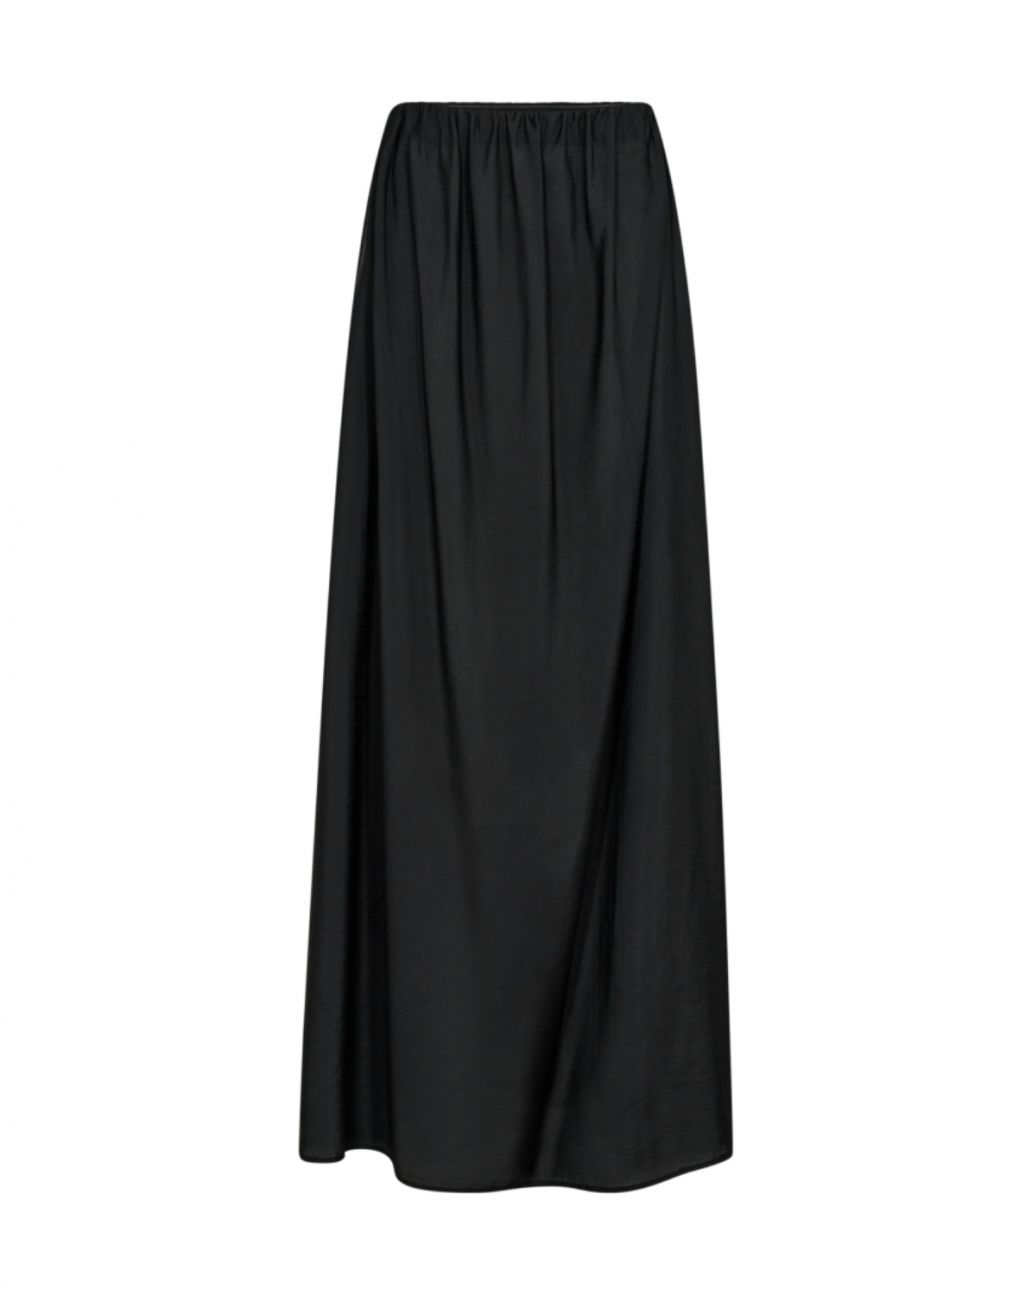 Co'Couture CallumCC Black Dress